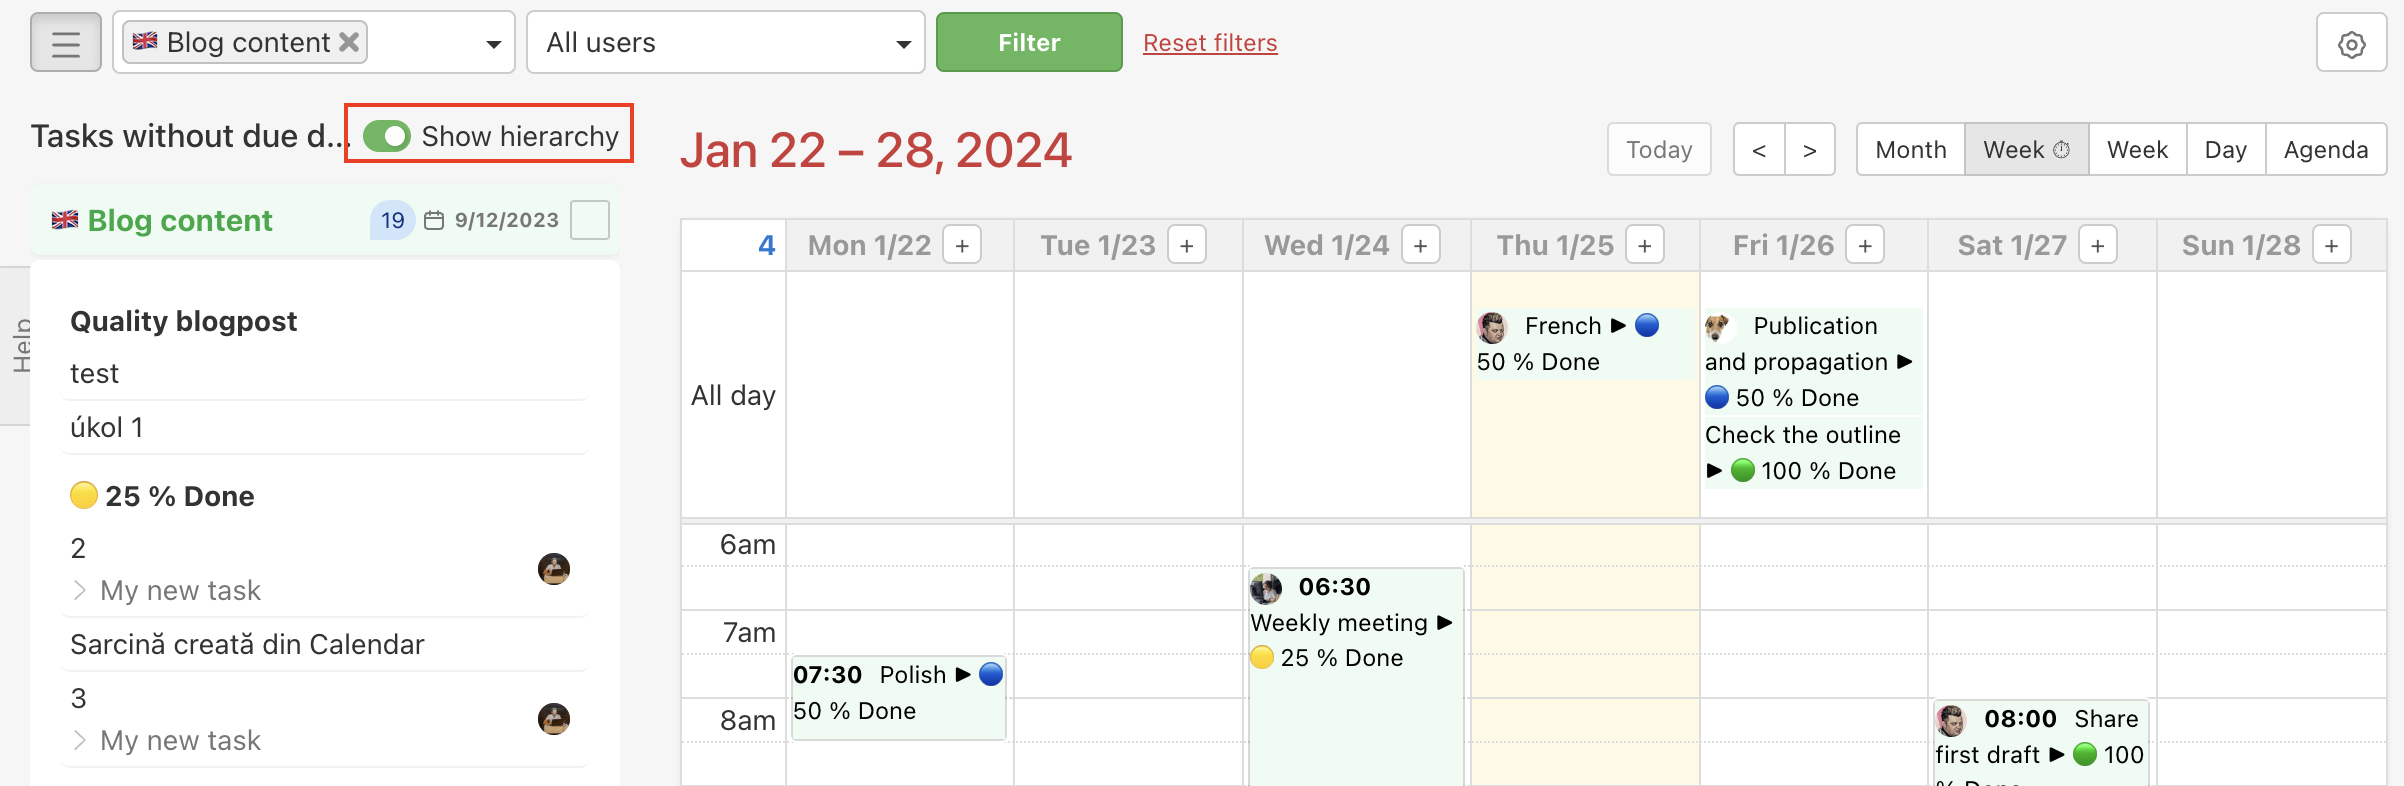 How to show parent tasks for subtasks in the Calendar.